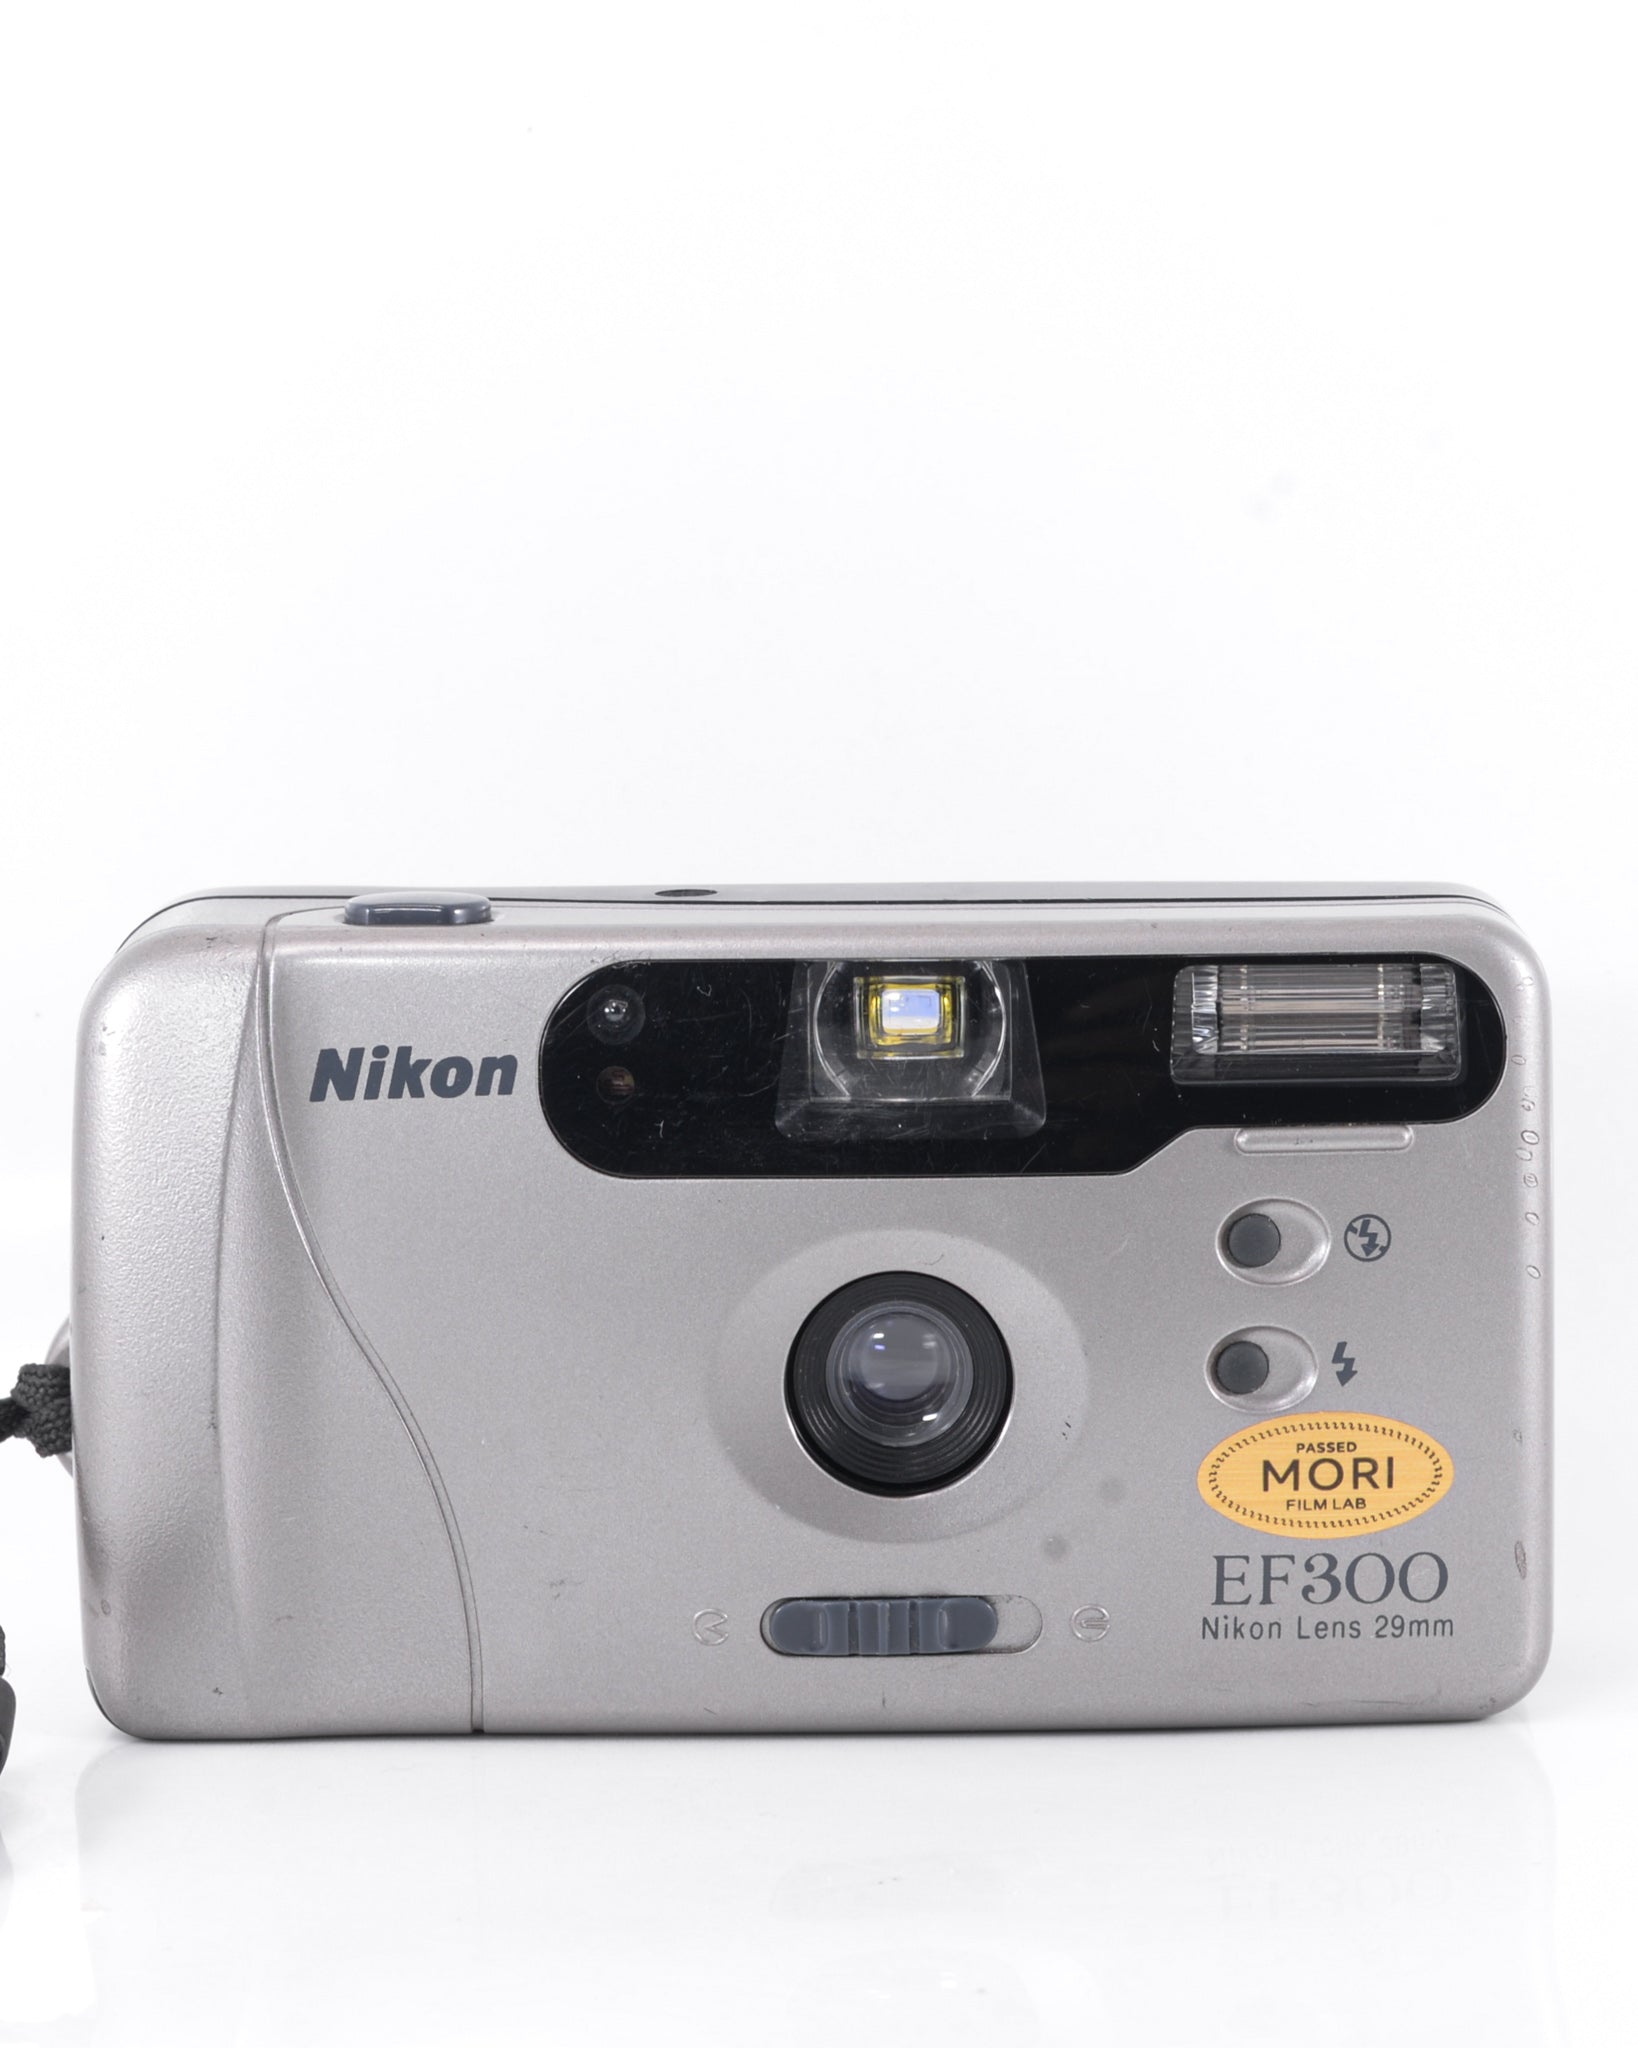 Nikon EF300 35mm point & shoot film camera with 29mm f4.5 lens